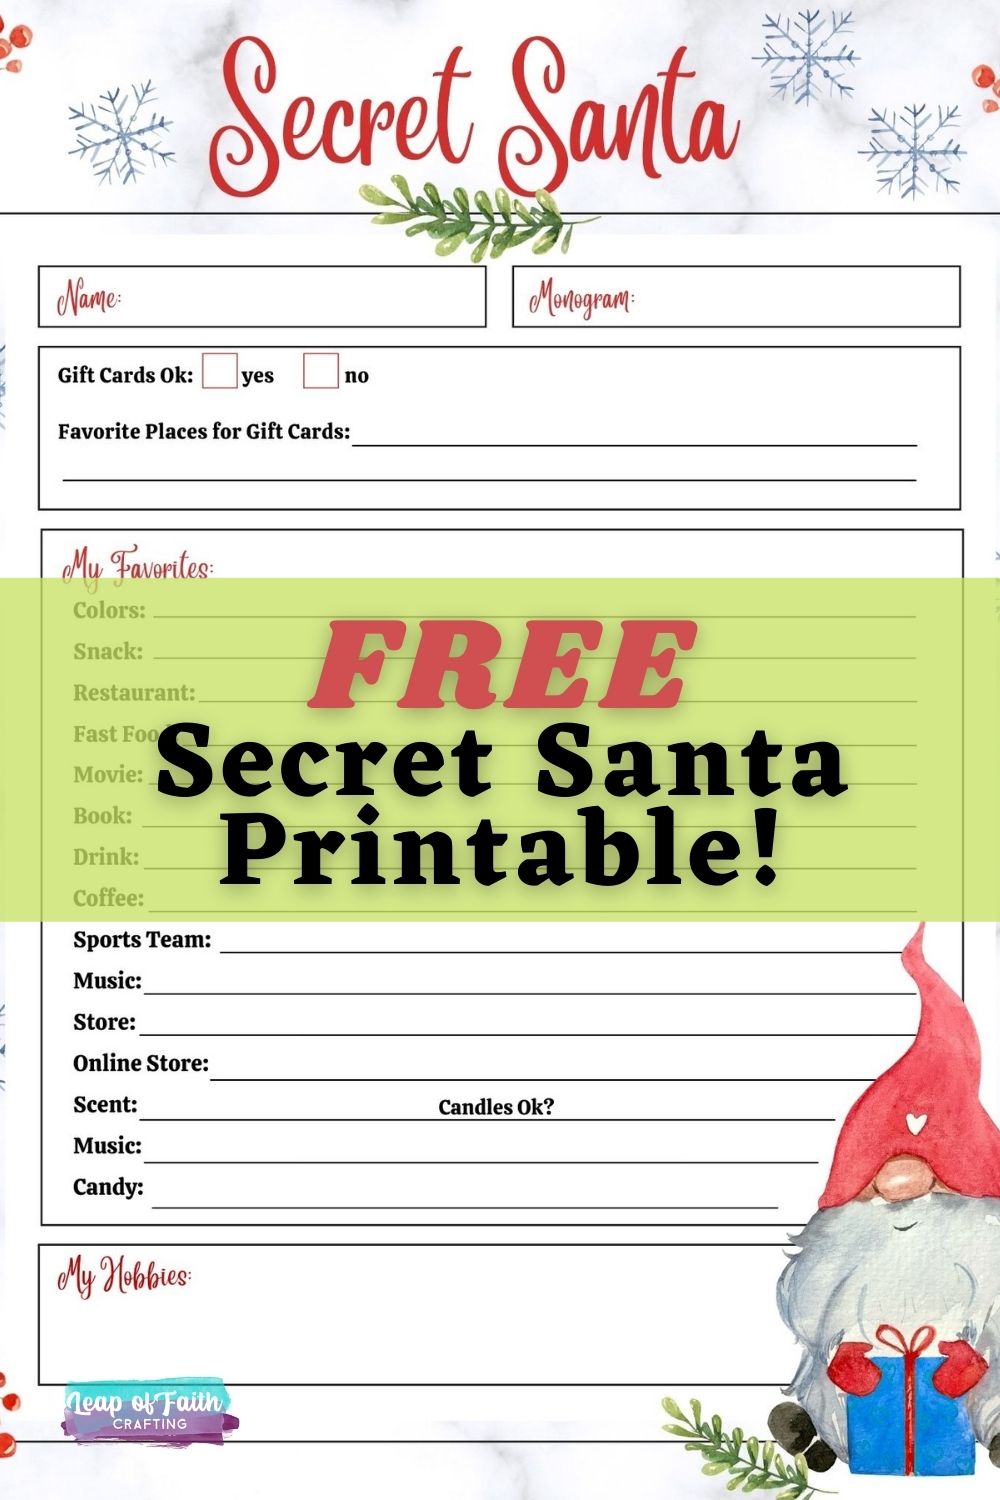 Secret Santa Questionnaire For Gift Exchange Printable 